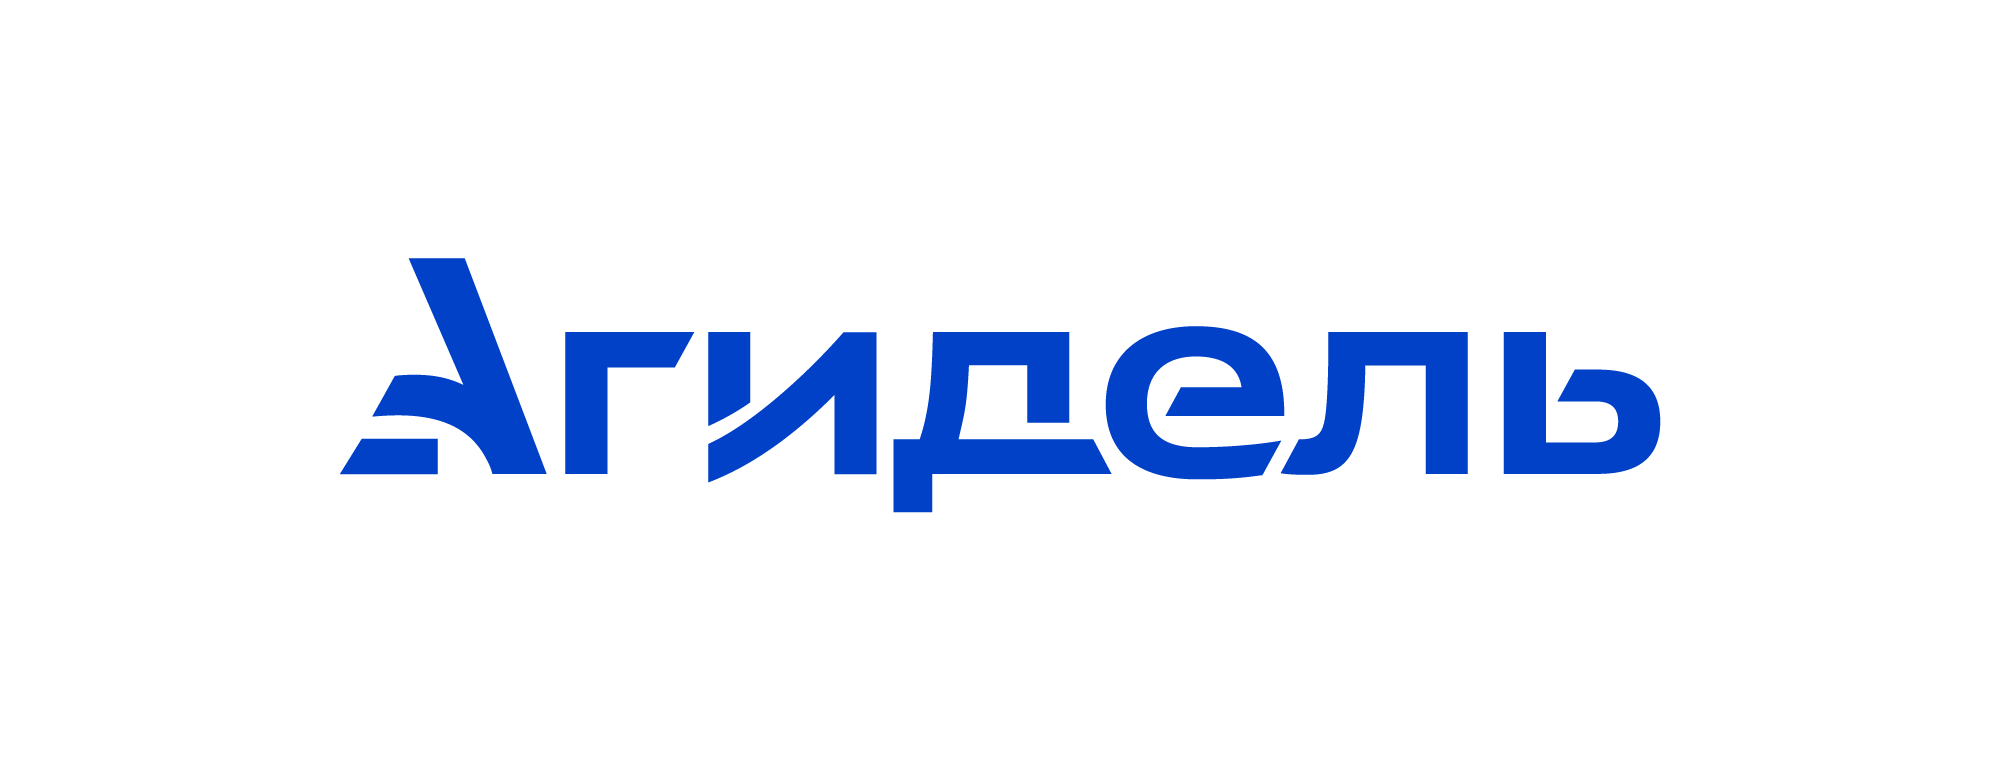 agidel logo text